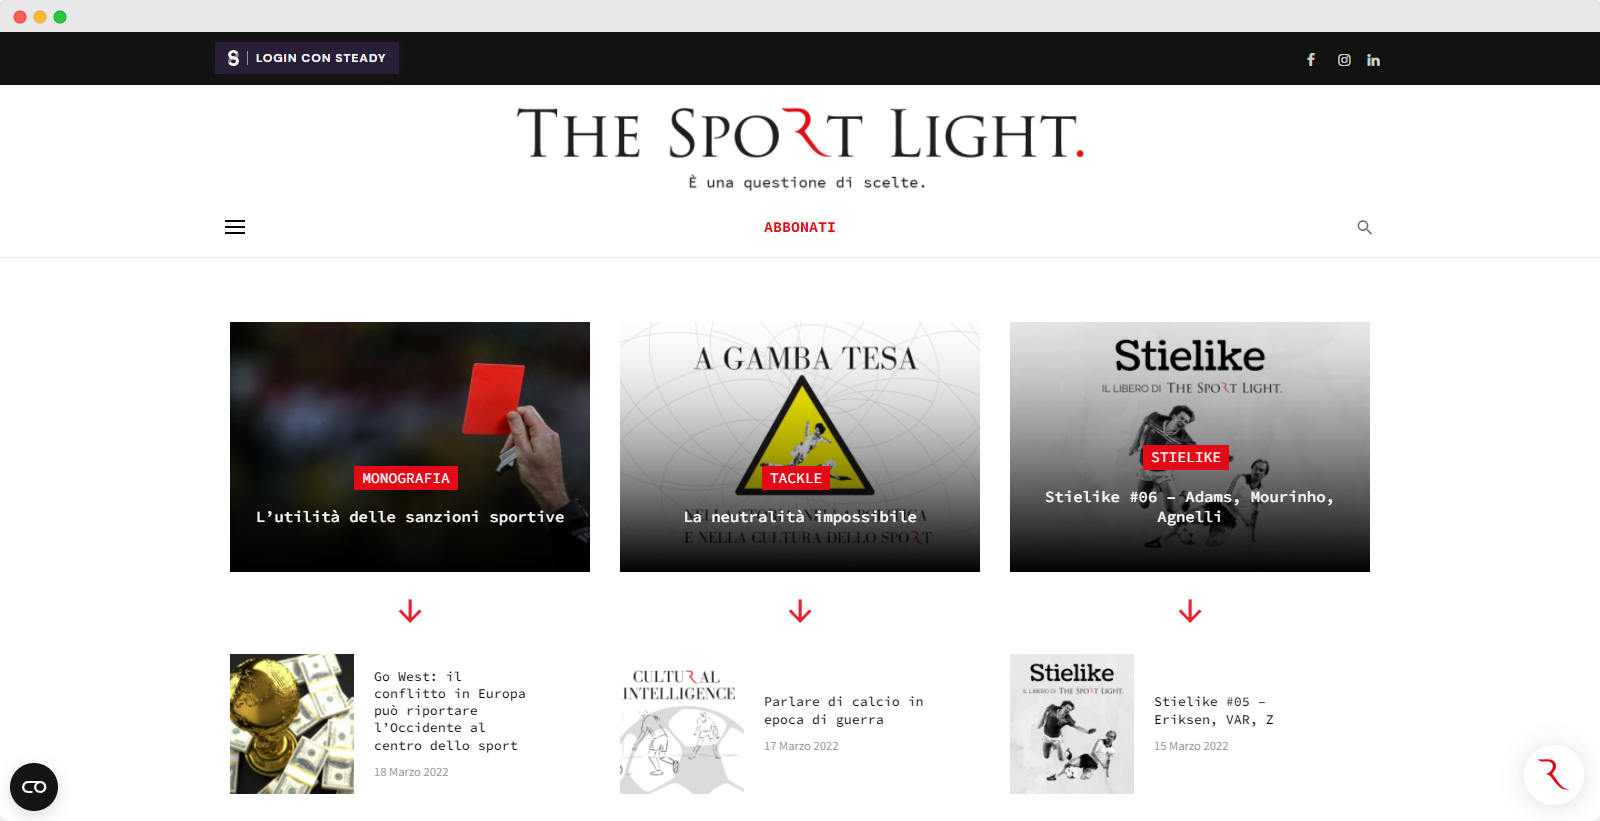 The SpoRt Light